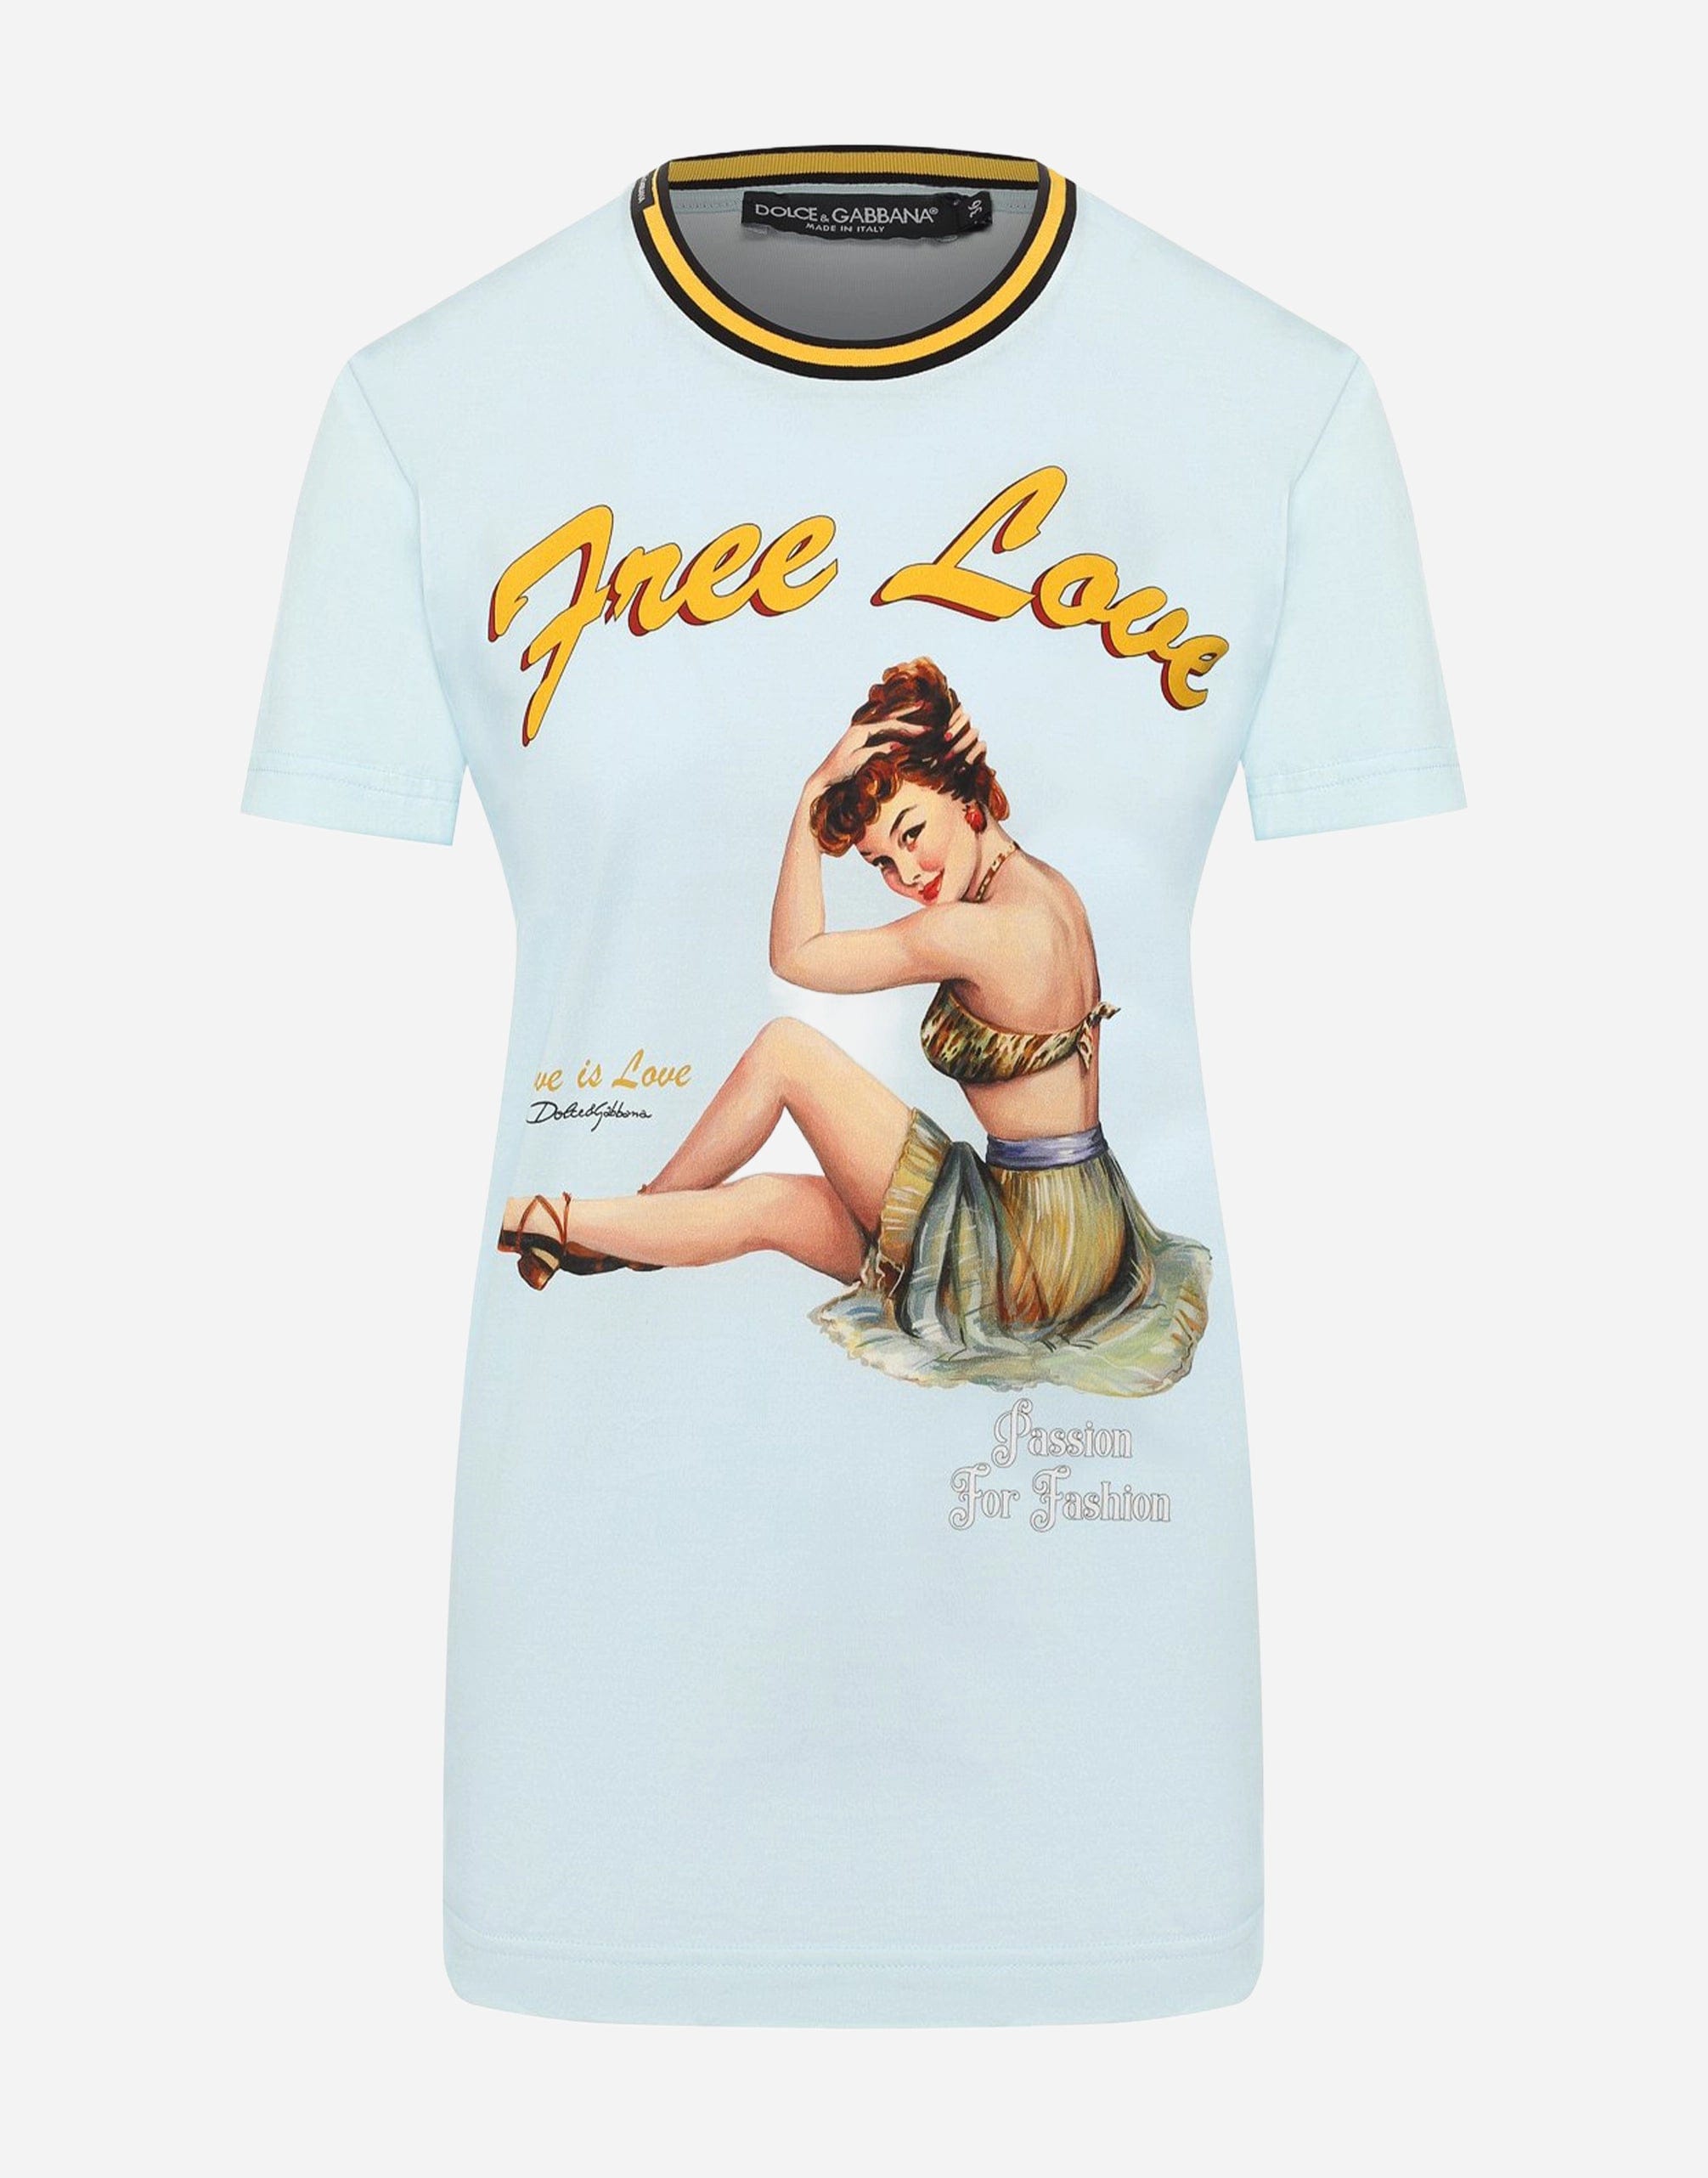 Dolce & Gabbana Free Love Print T-Shirt